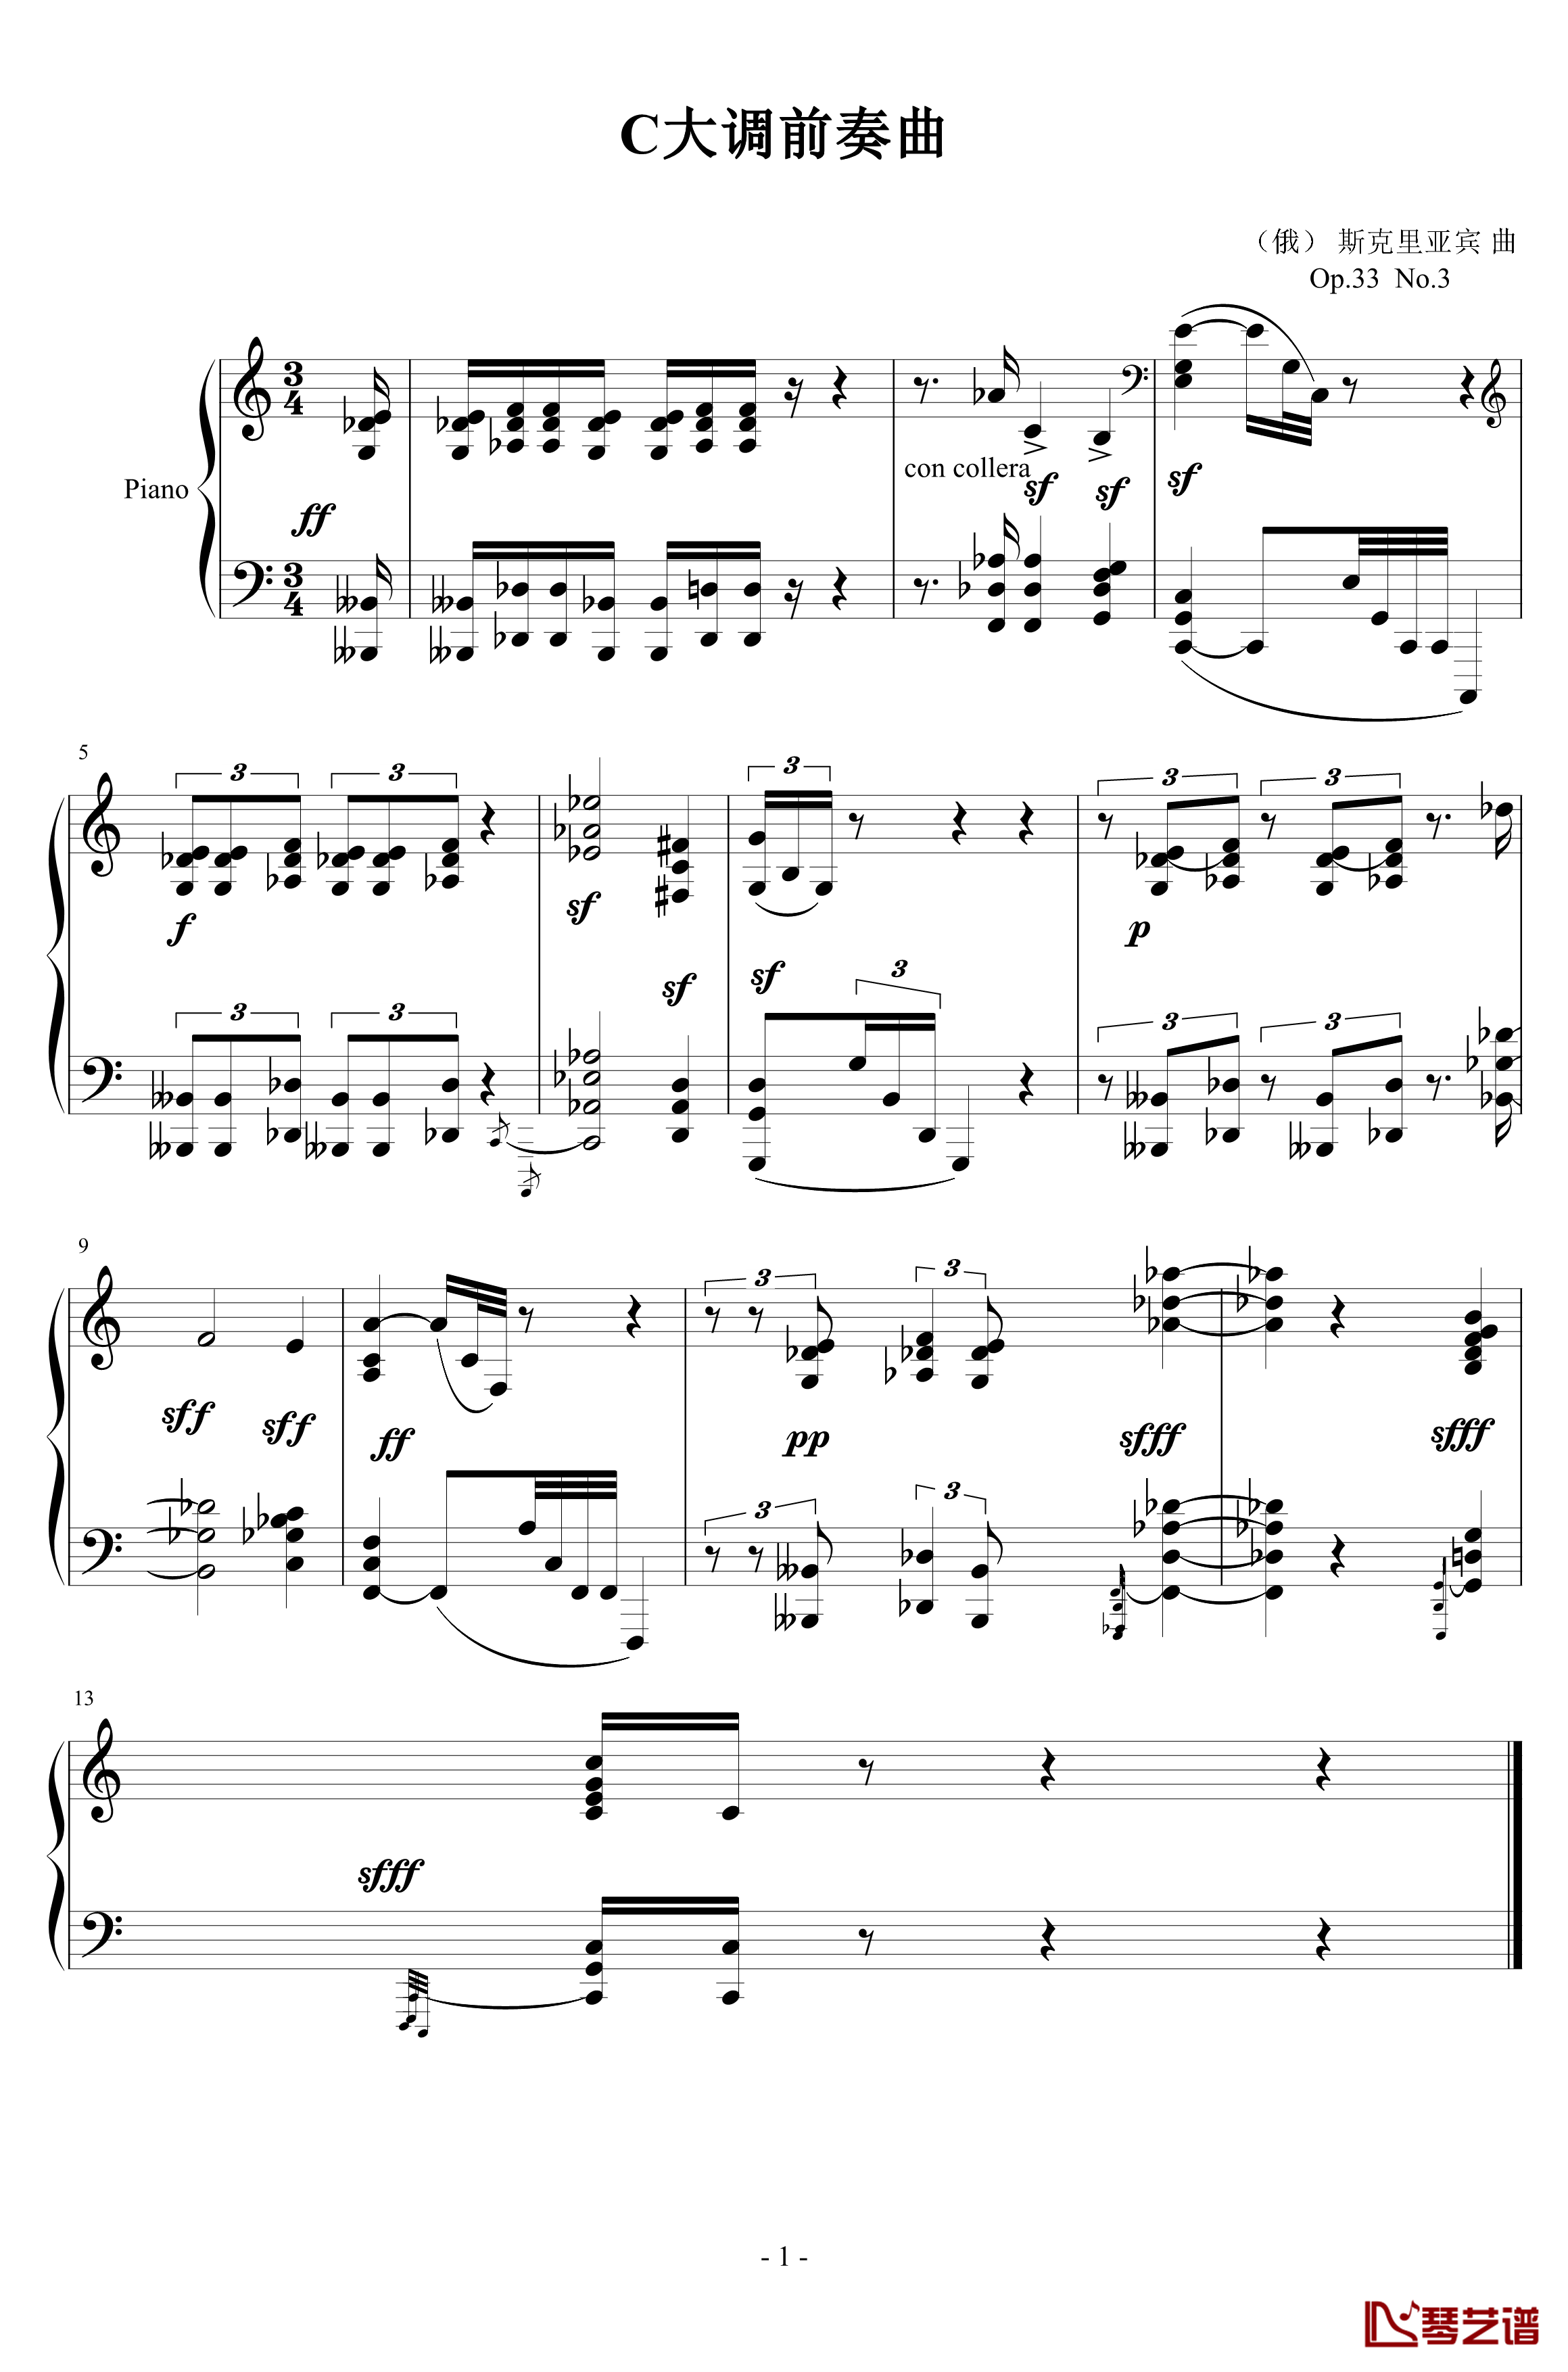 C大调前奏曲钢琴谱-斯克里亚宾-Op.33  No.31